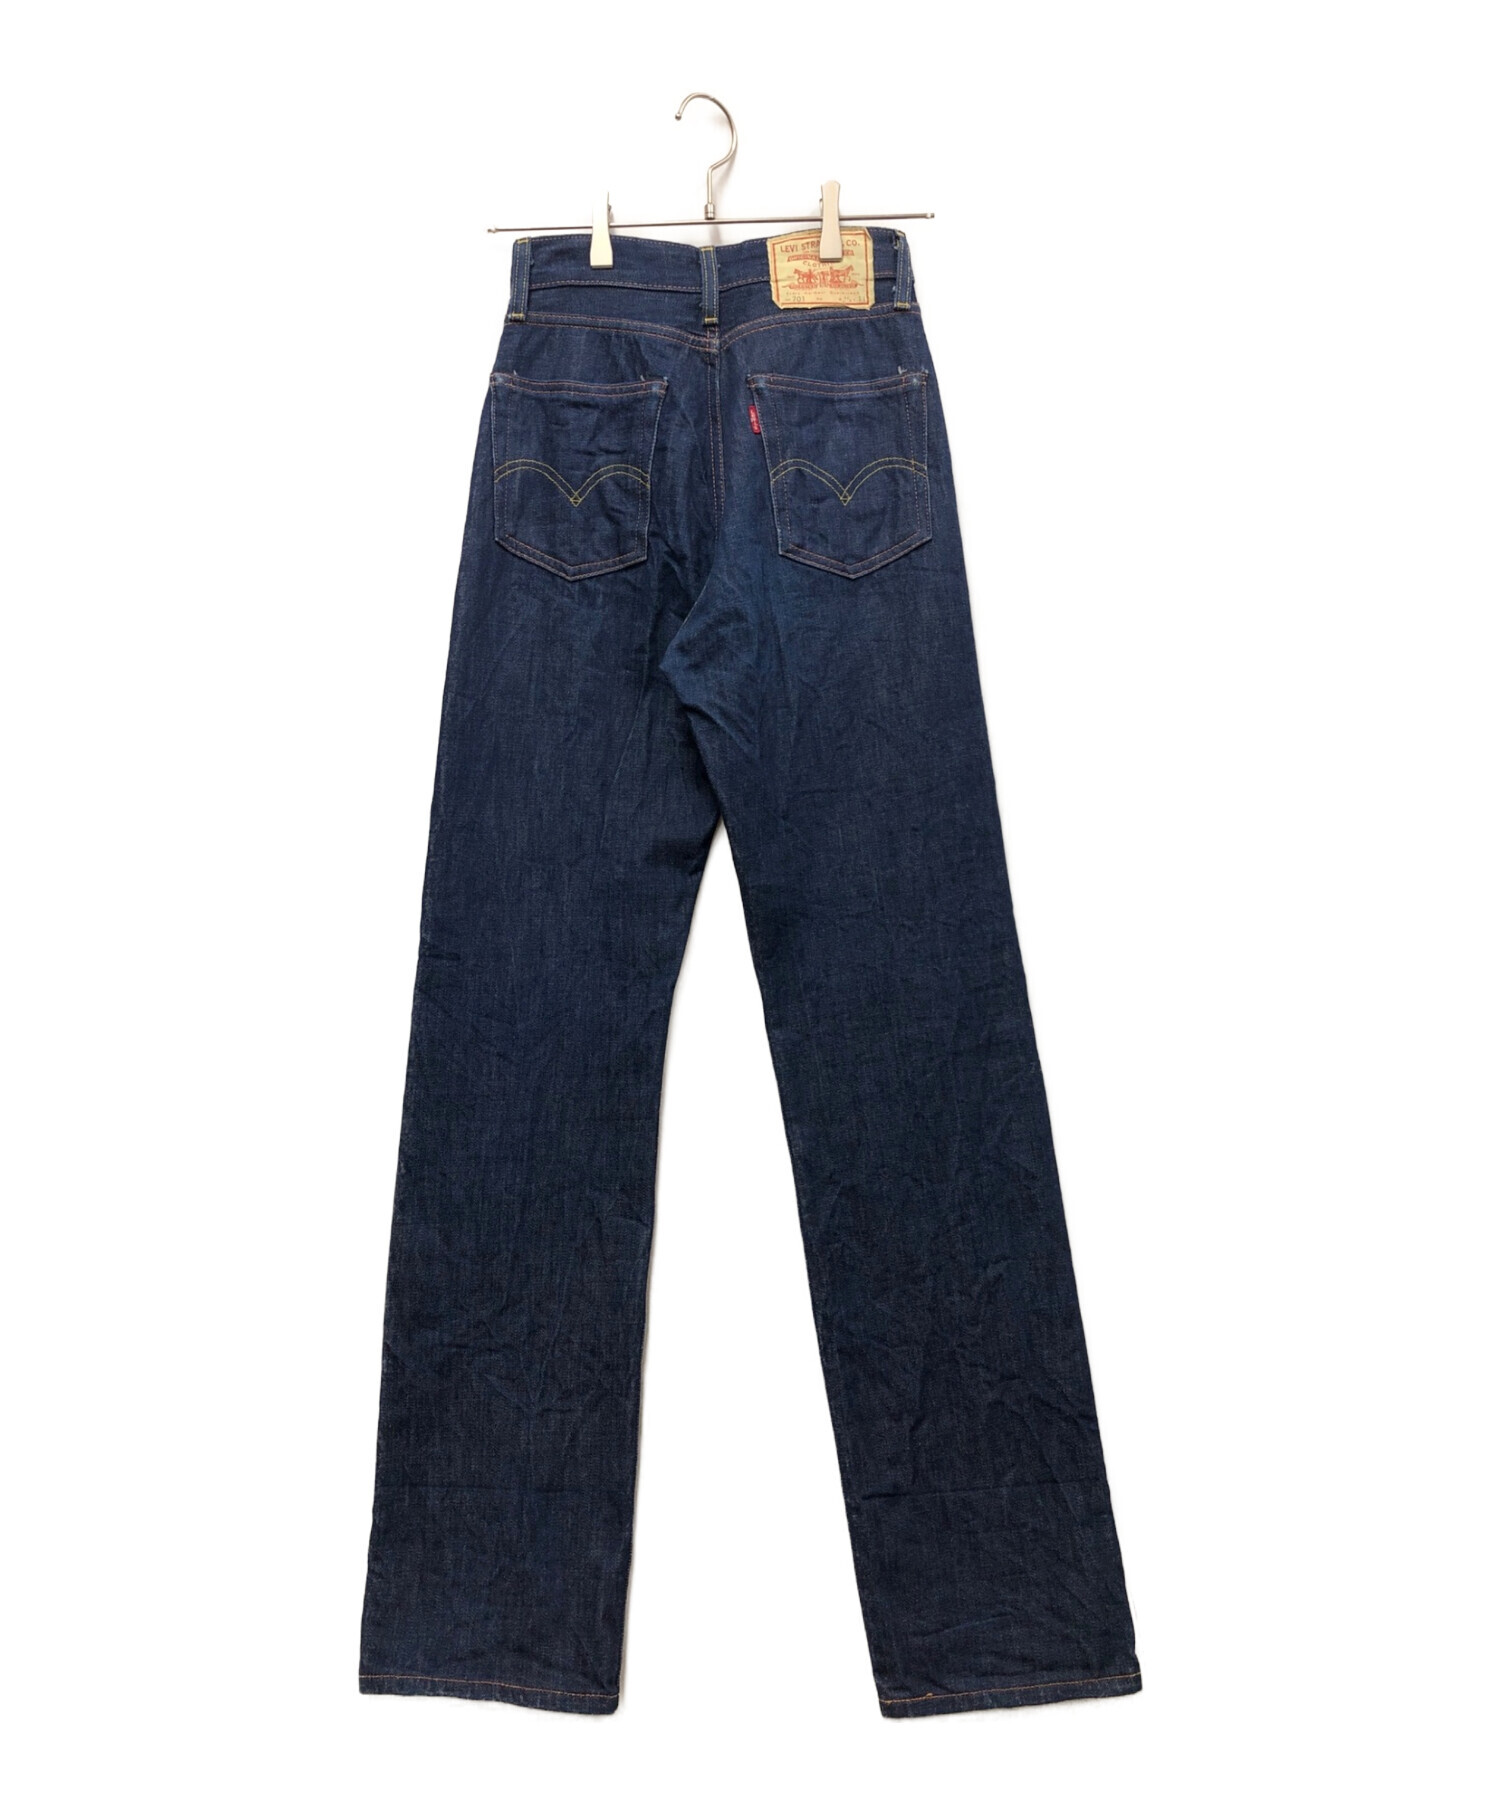 LEVI'S (リーバイス) 1950s 701 Jeans Rigid ブルー サイズ:W25×L34